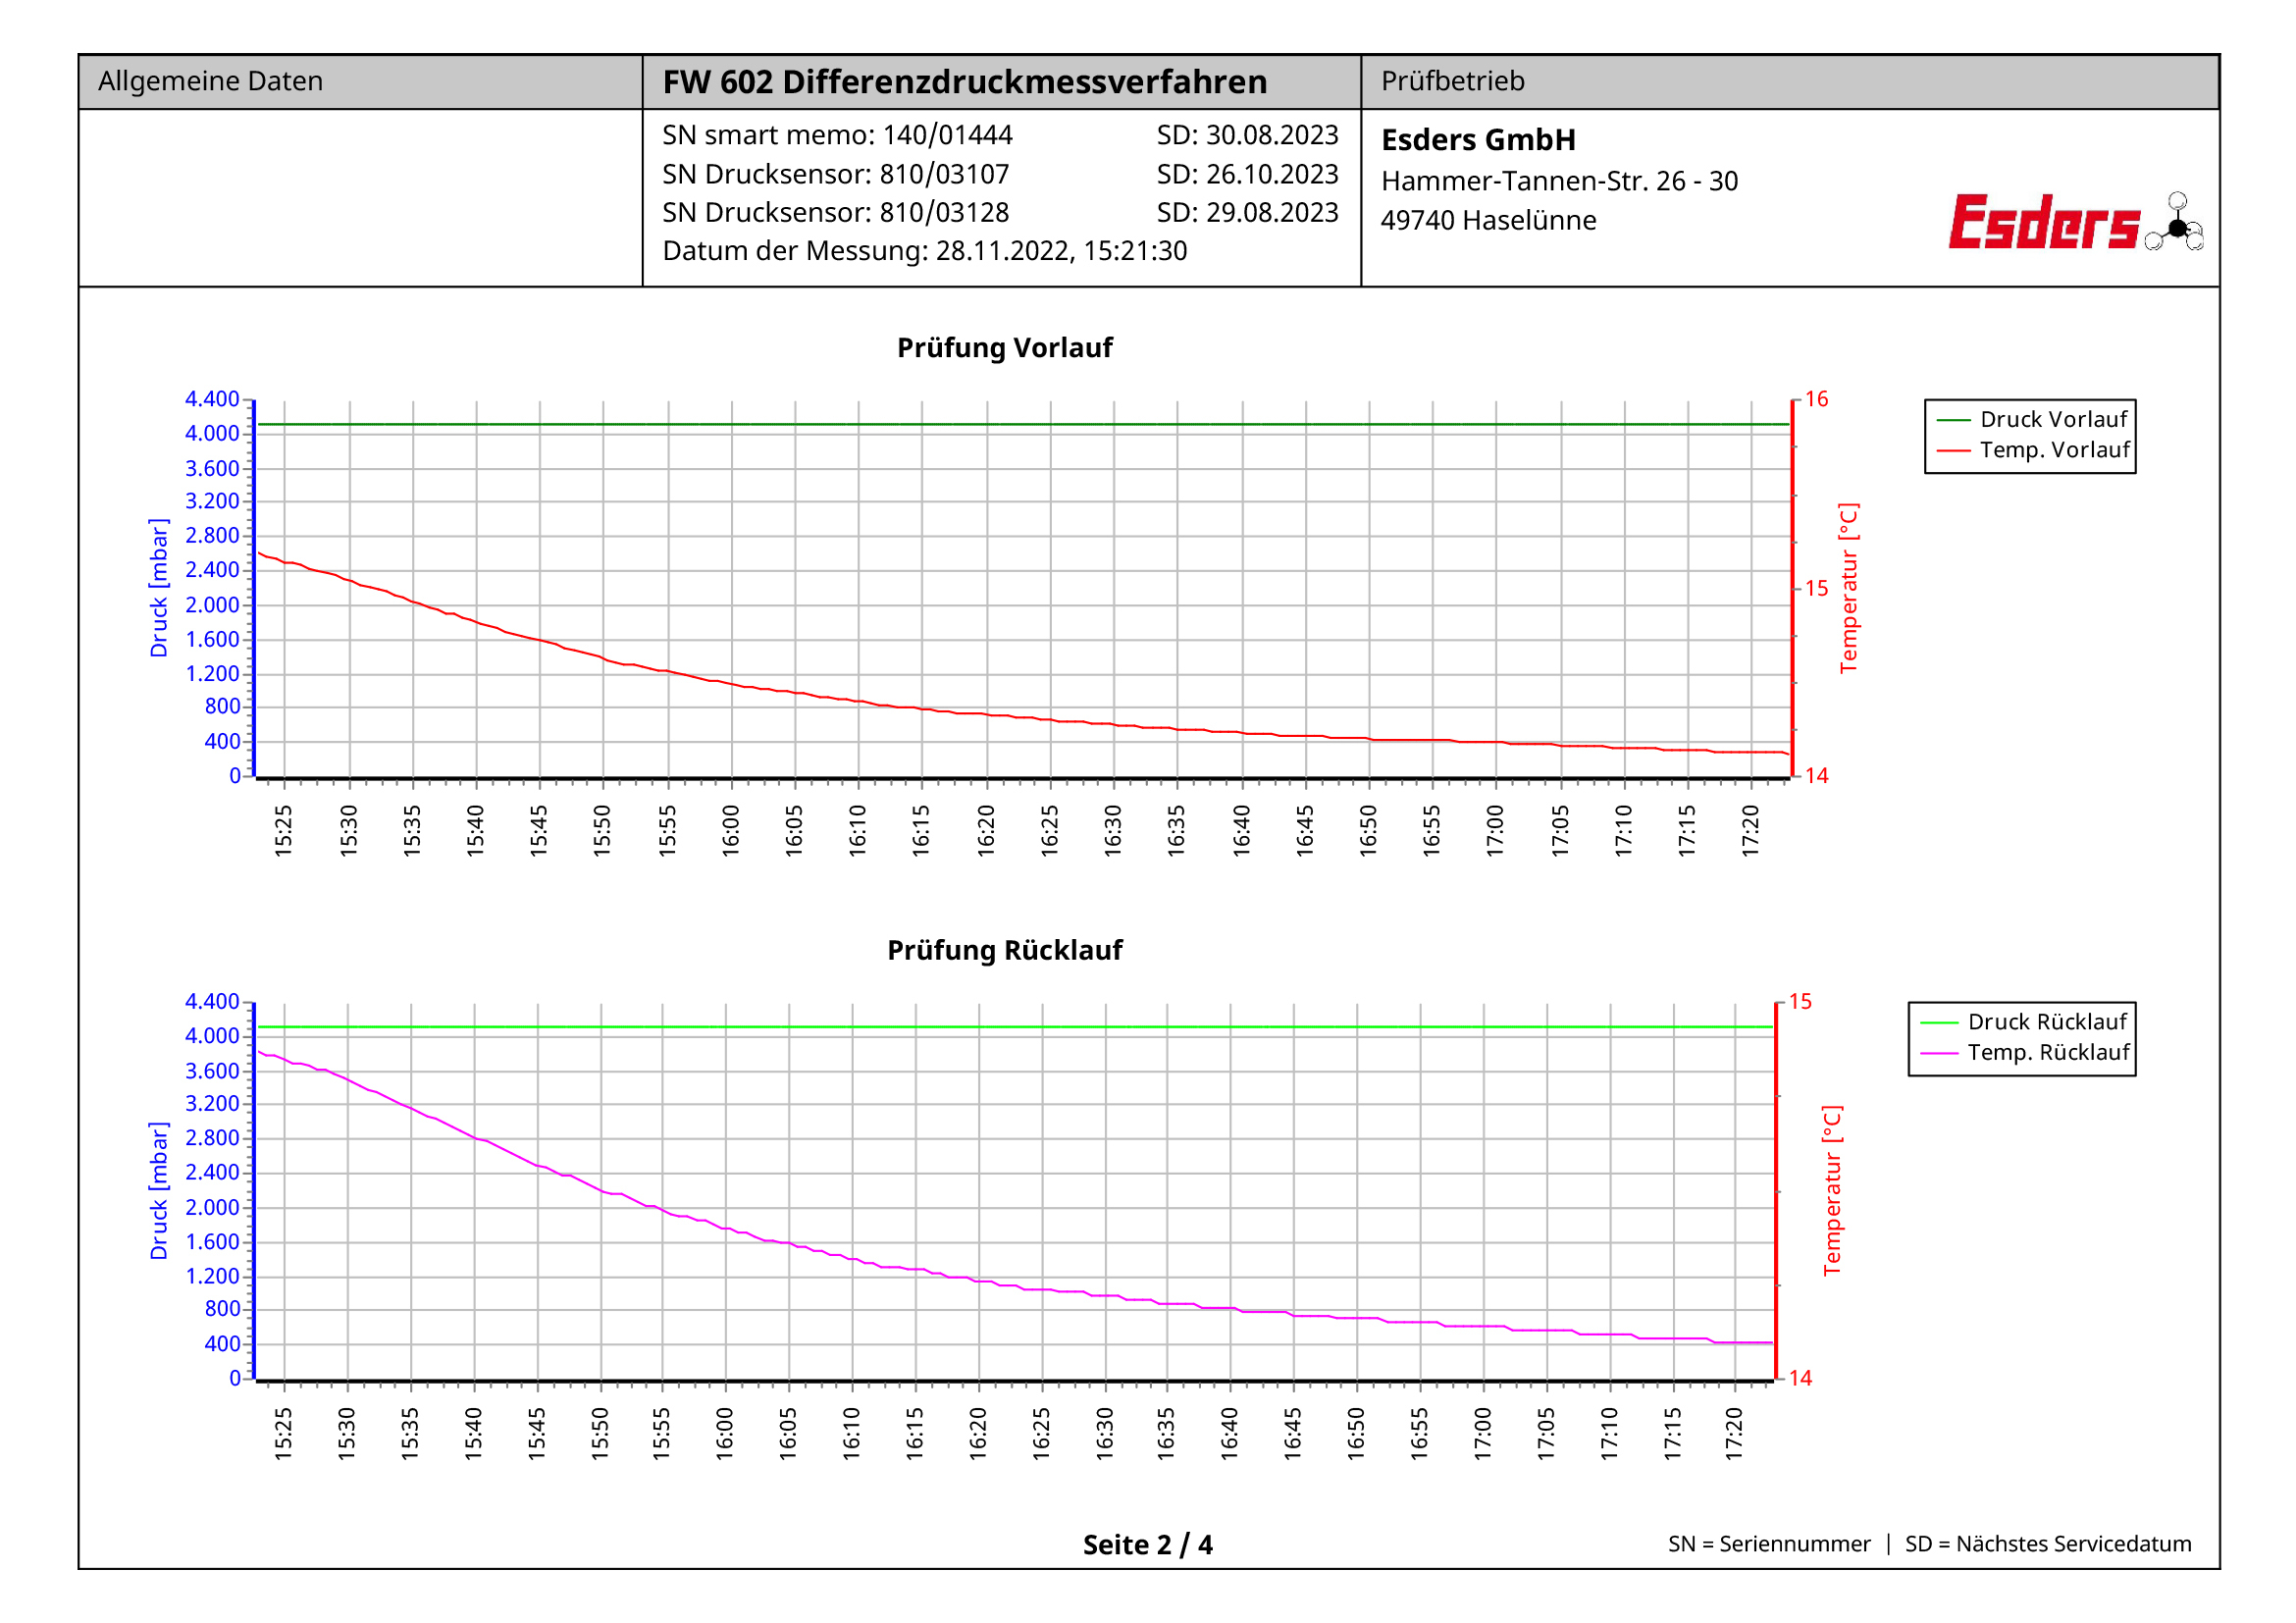 Differential pressure measurement with smart memo